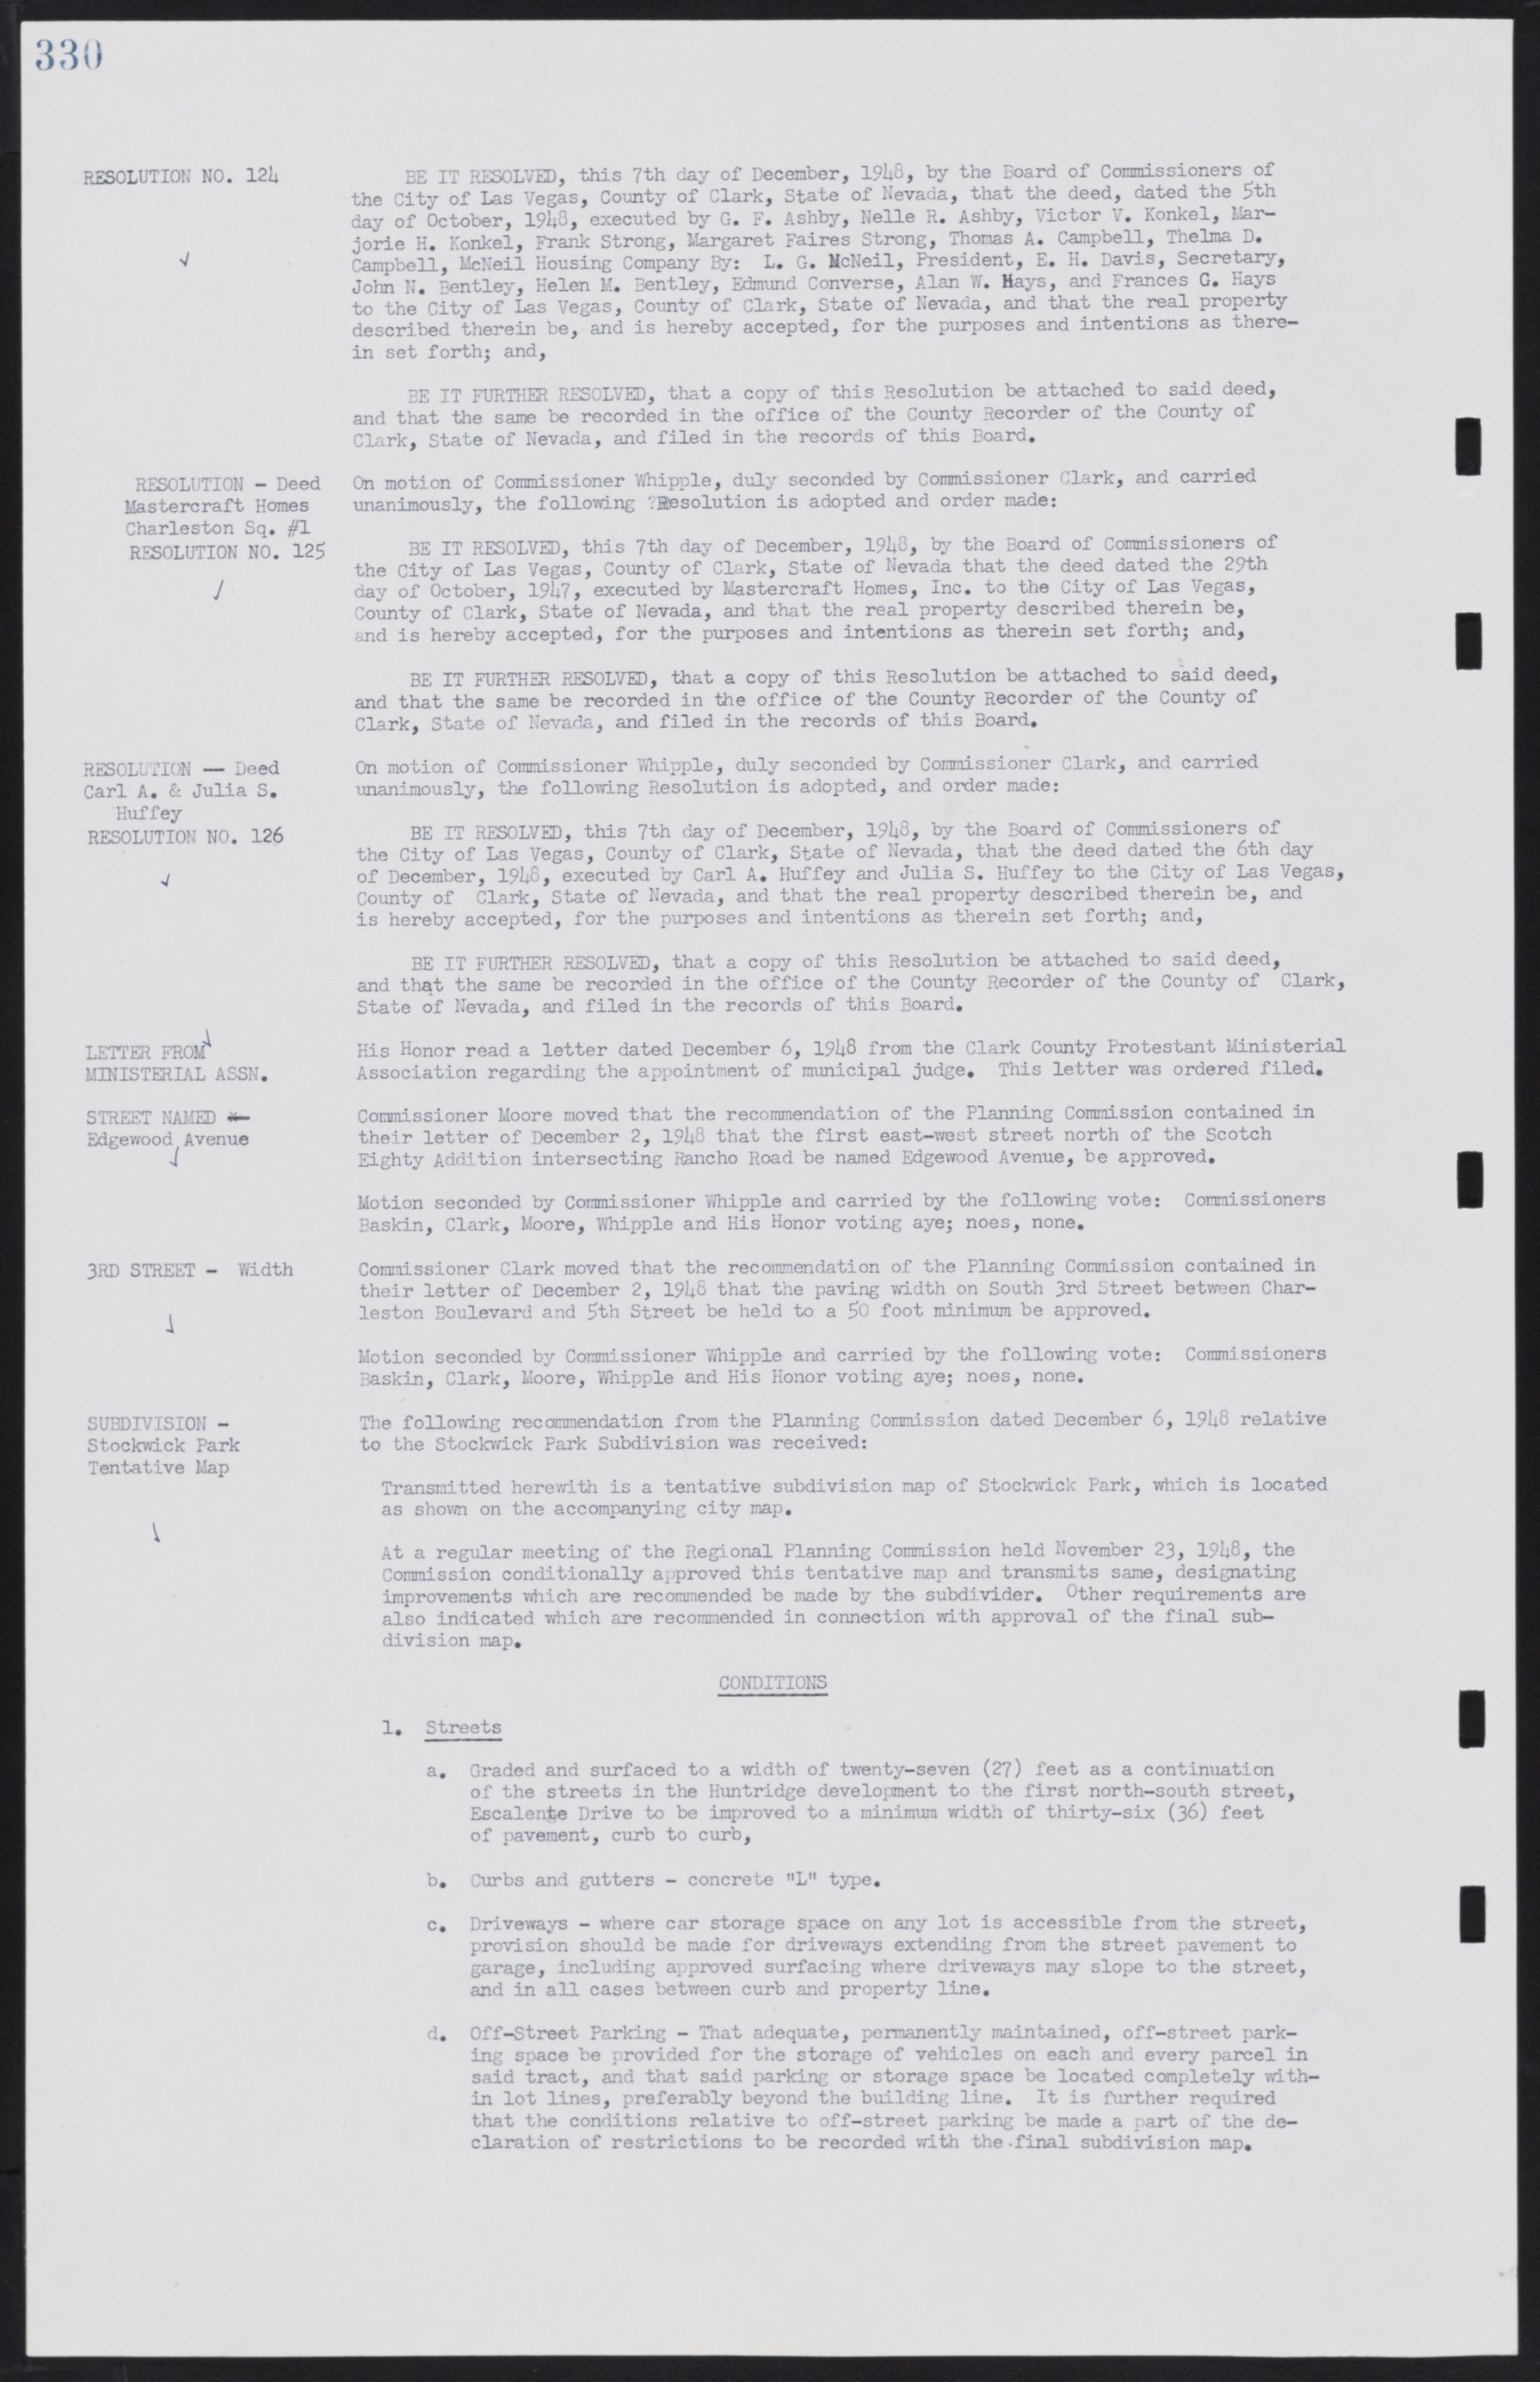 Las Vegas City Commission Minutes, January 7, 1947 to October 26, 1949, lvc000006-354